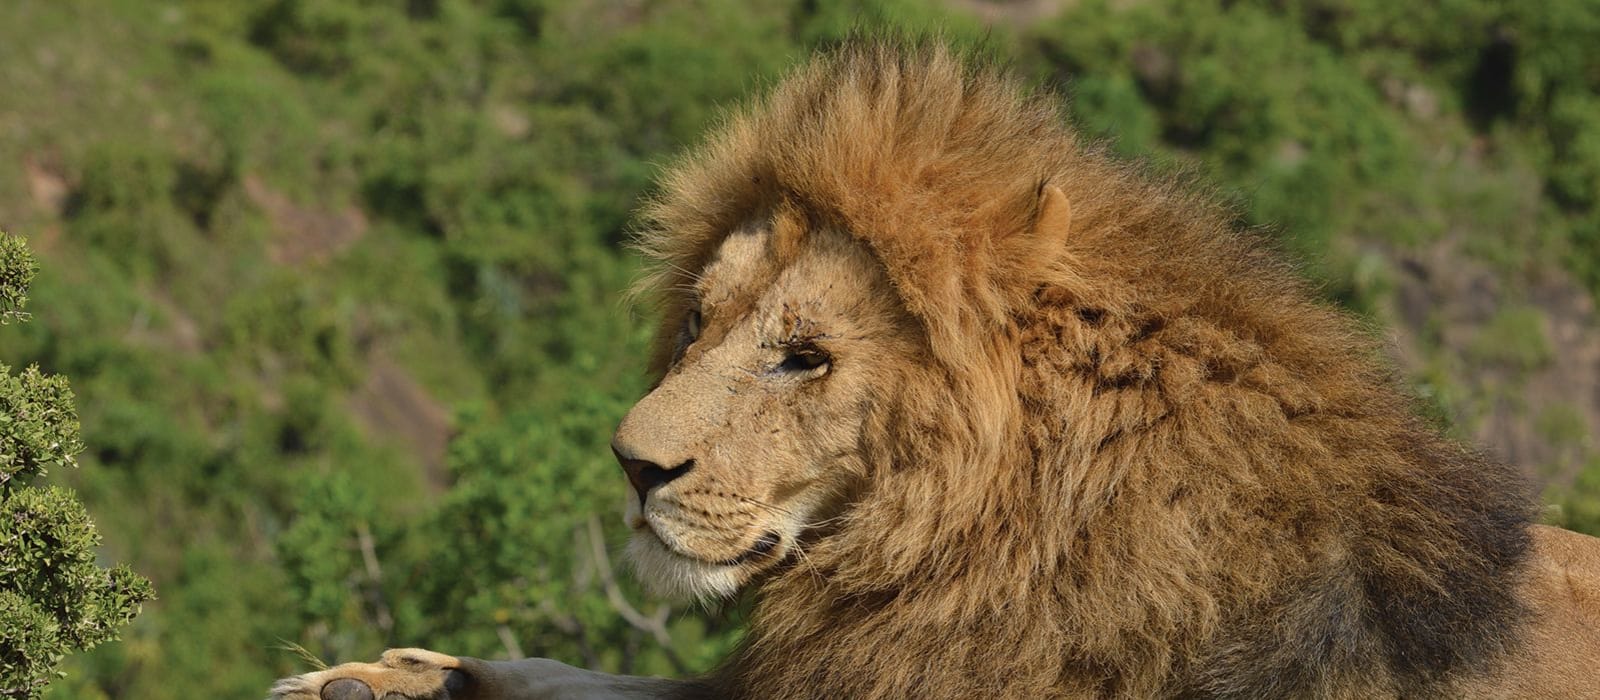 Lions and their prey in Kenya&#39;s Maasai Mara